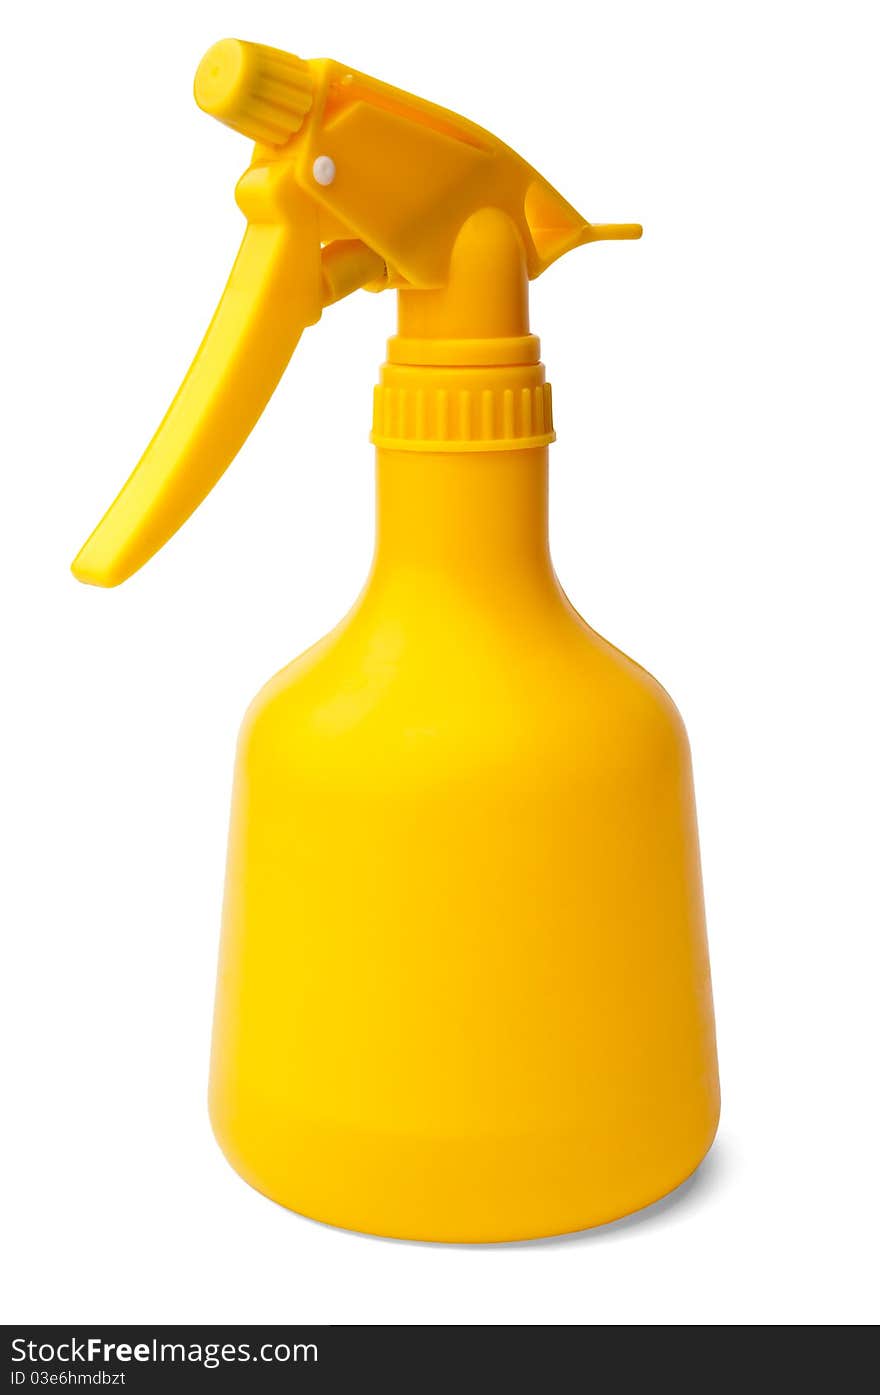 Isolated yellow plastic sprayer on white background